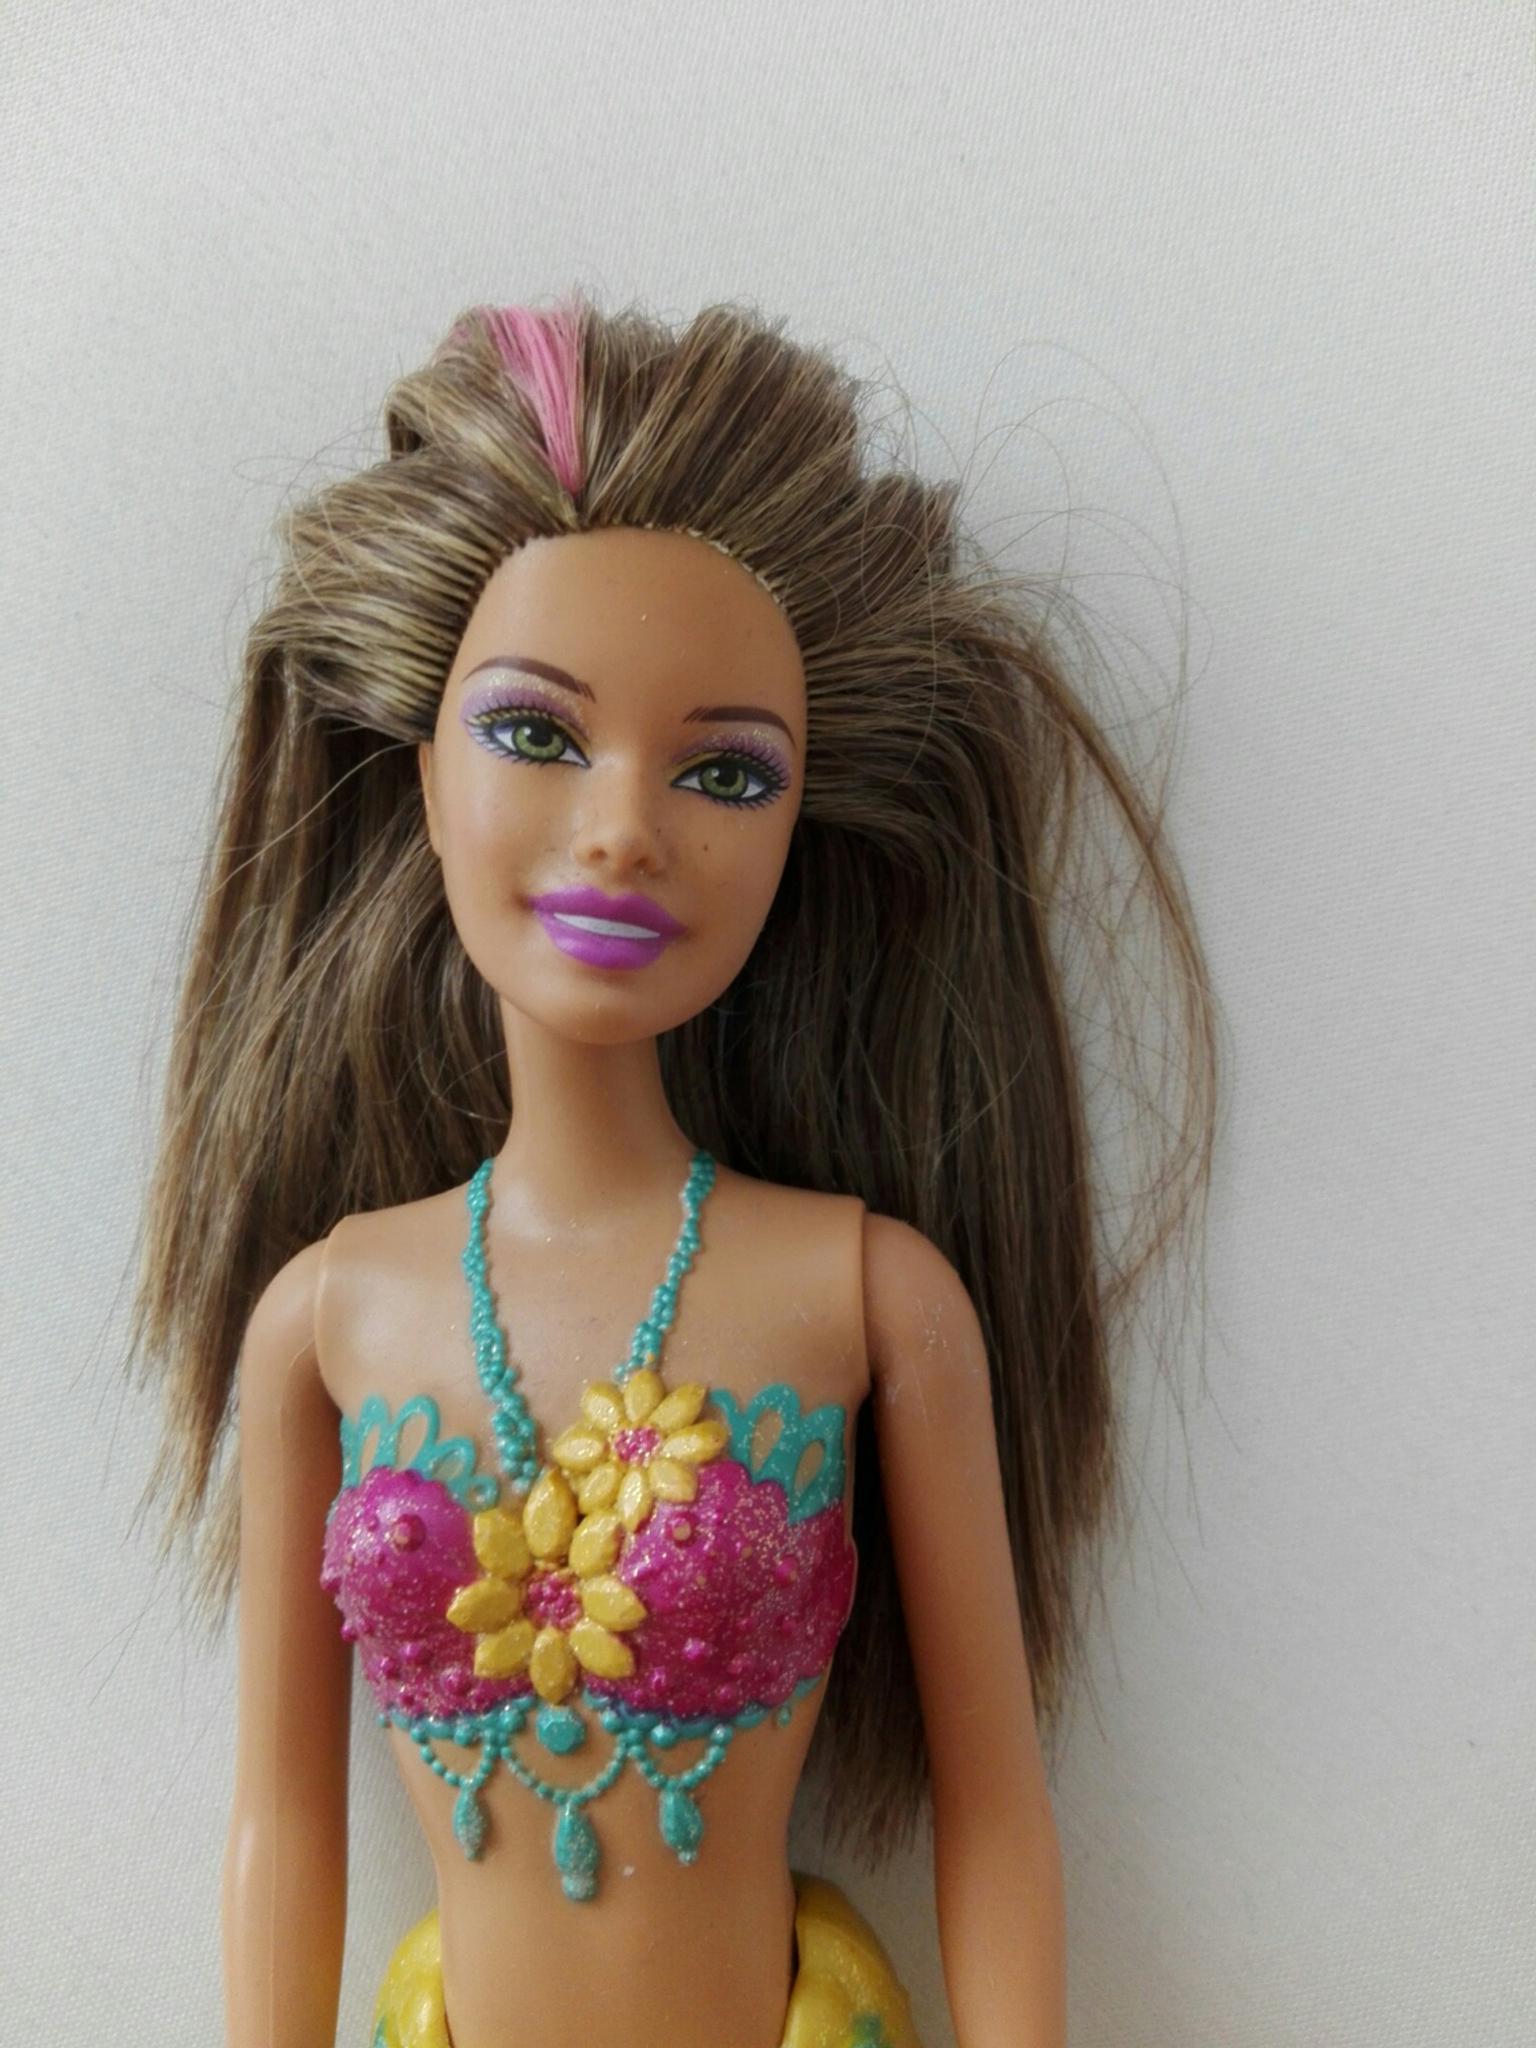 Barbie Friseur Spiele